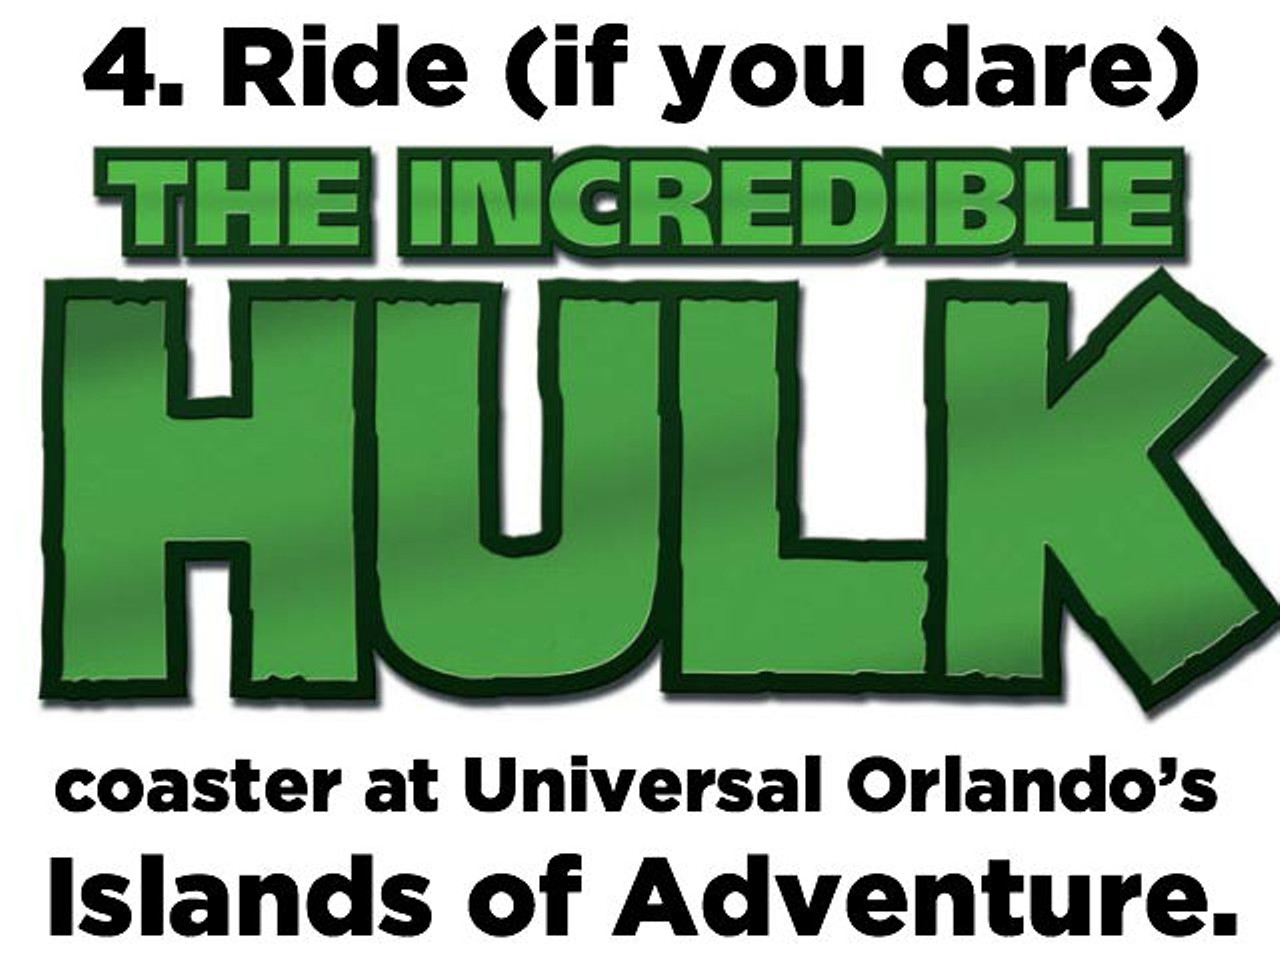 4. Ride the Incredible Hulk Coaster at Universal Orlando&#146;s Islands of Adventure (universalorlando.com).